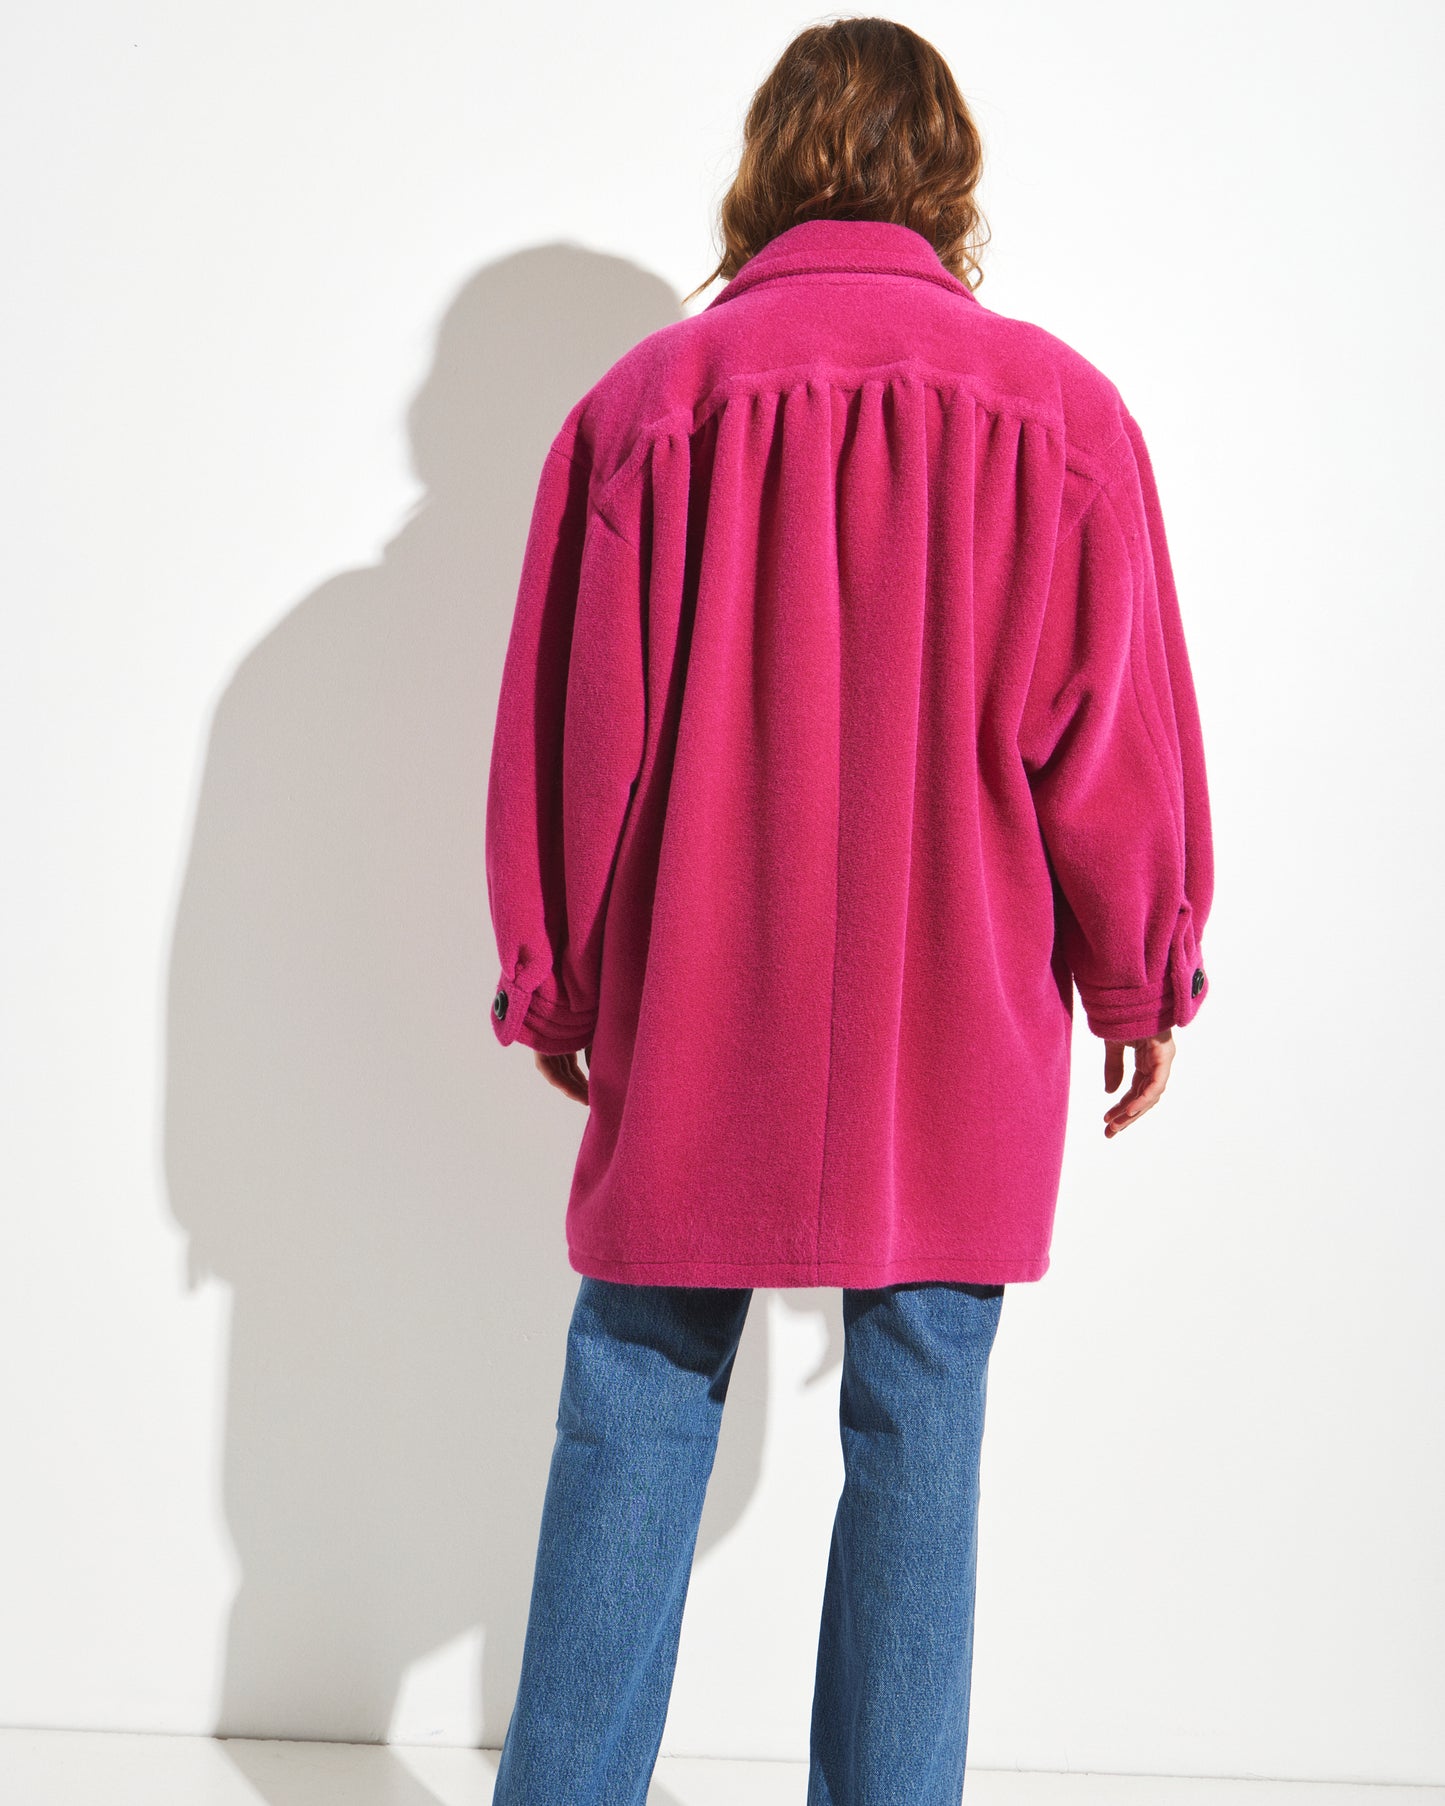 YSL Rive Gauche Pink Wool Jacket